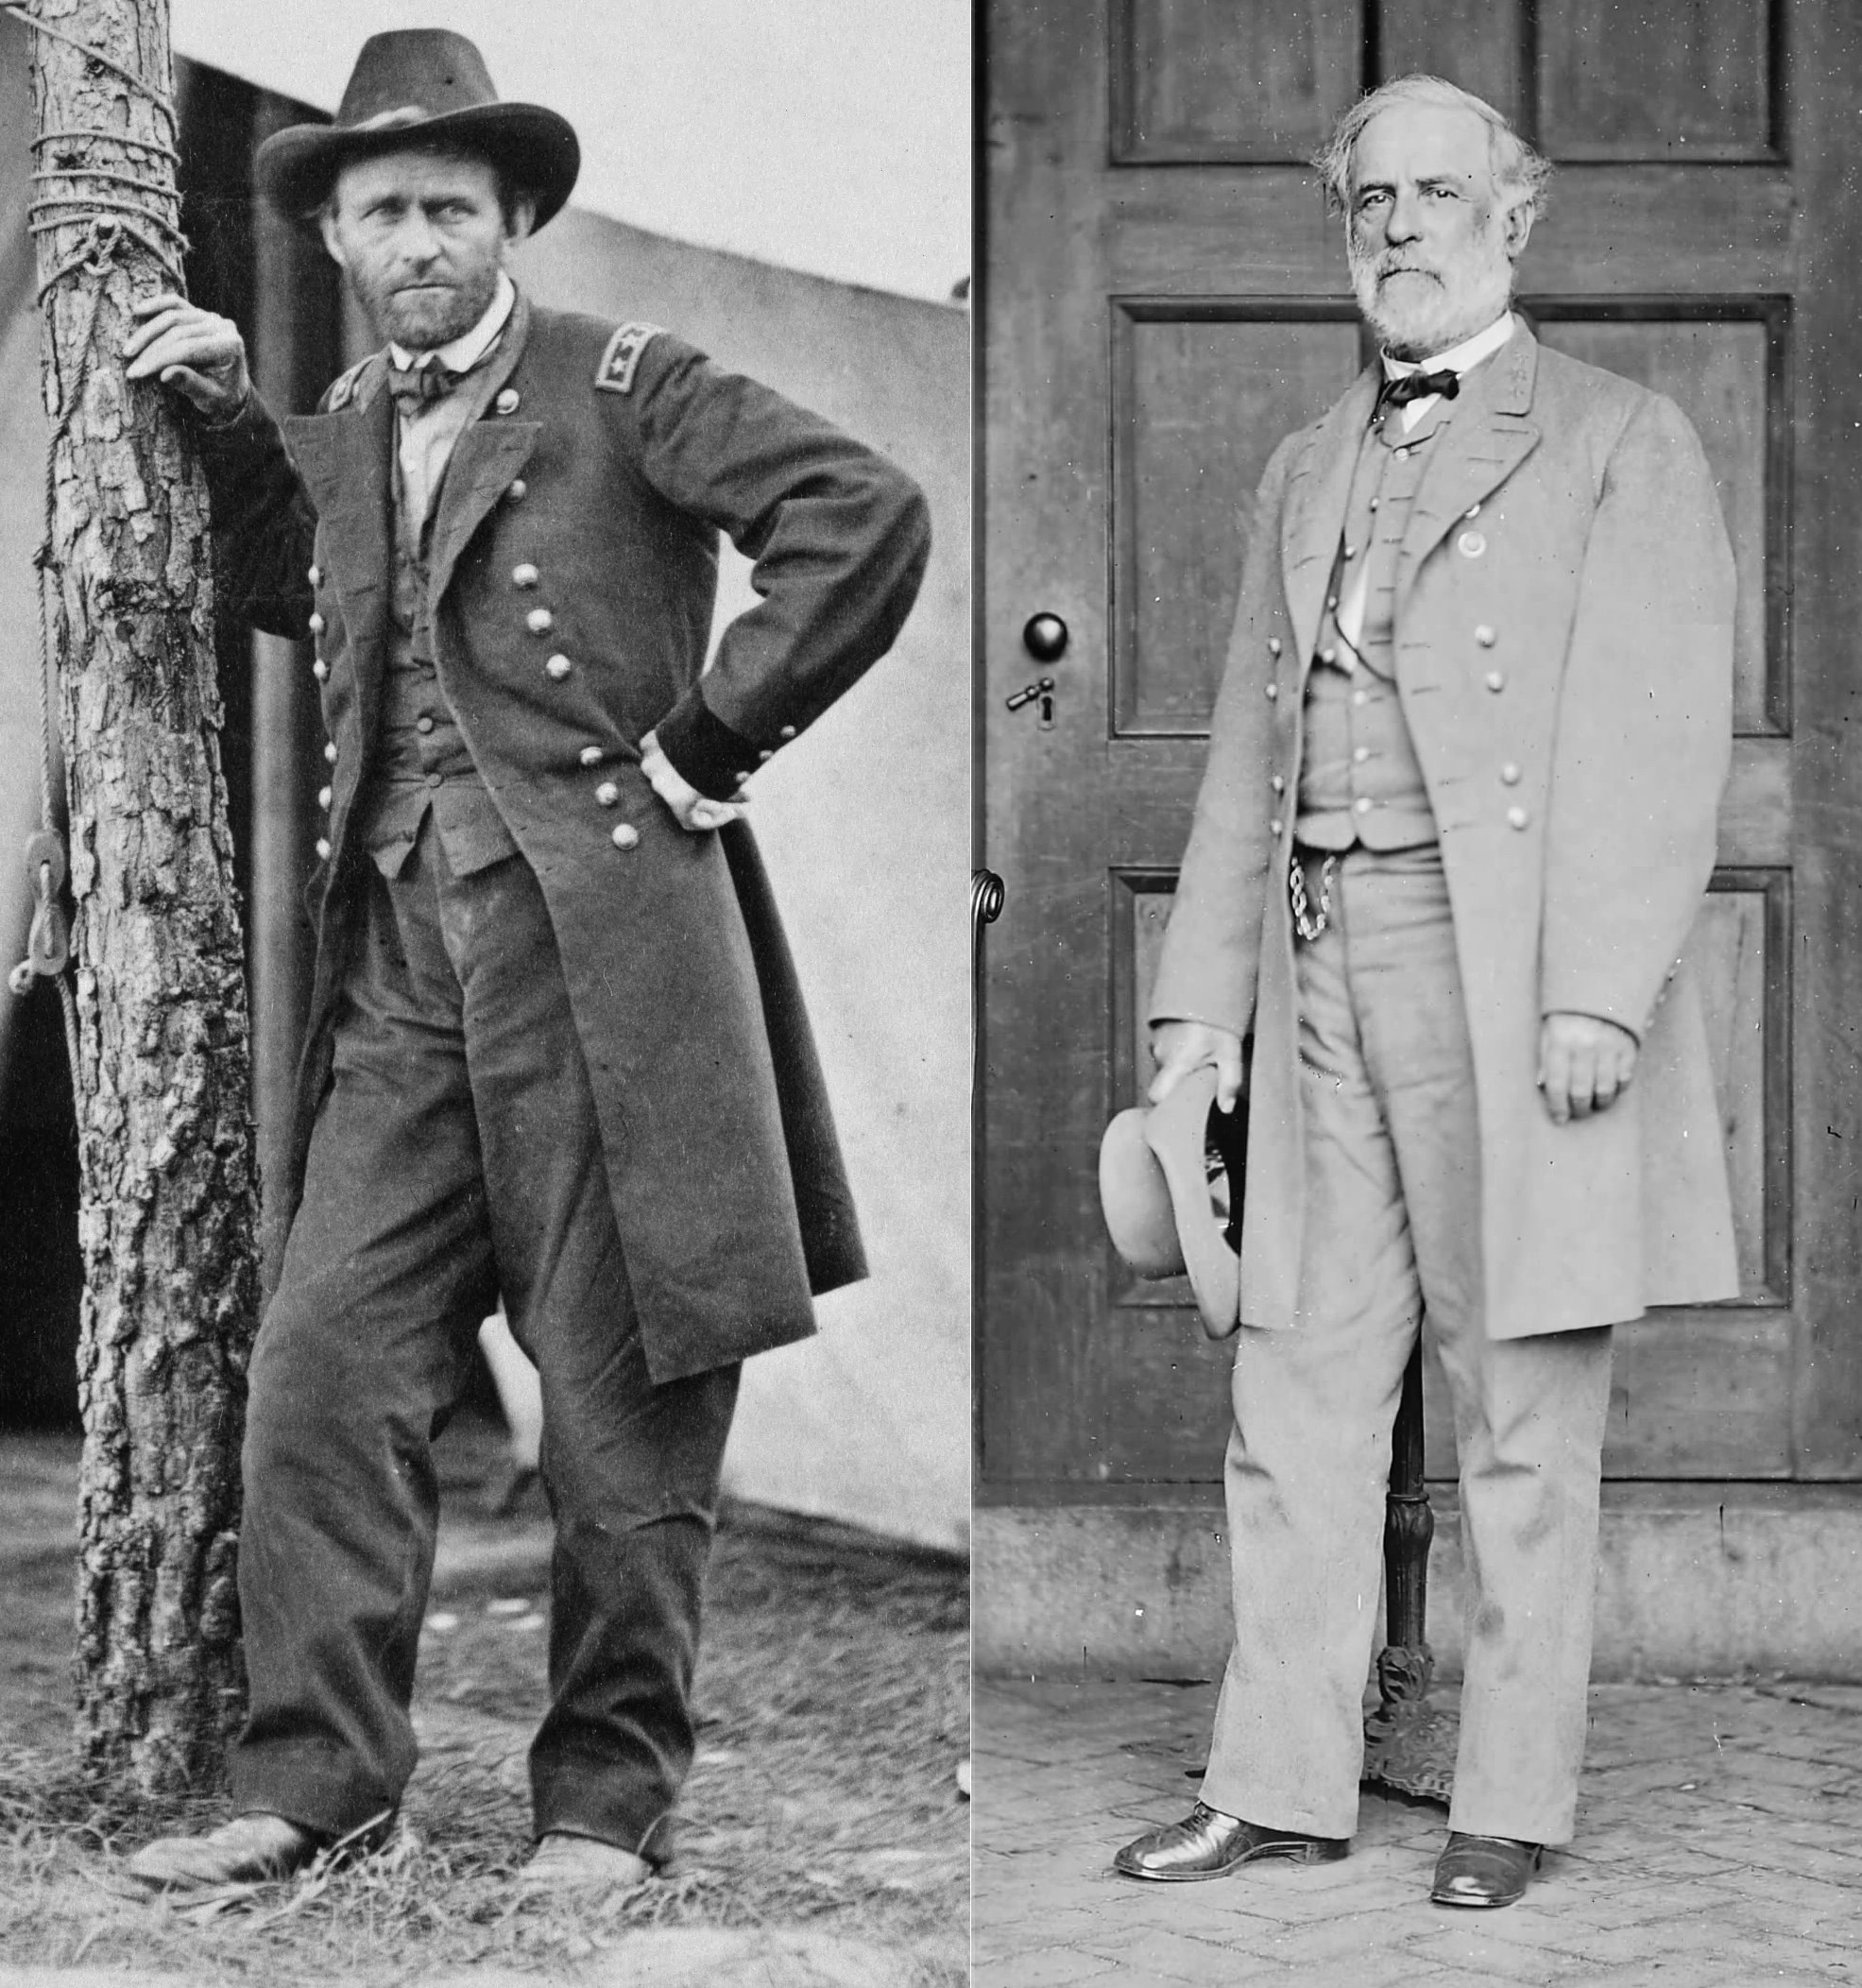 Ulysses S. Grant and Robert E. Lee